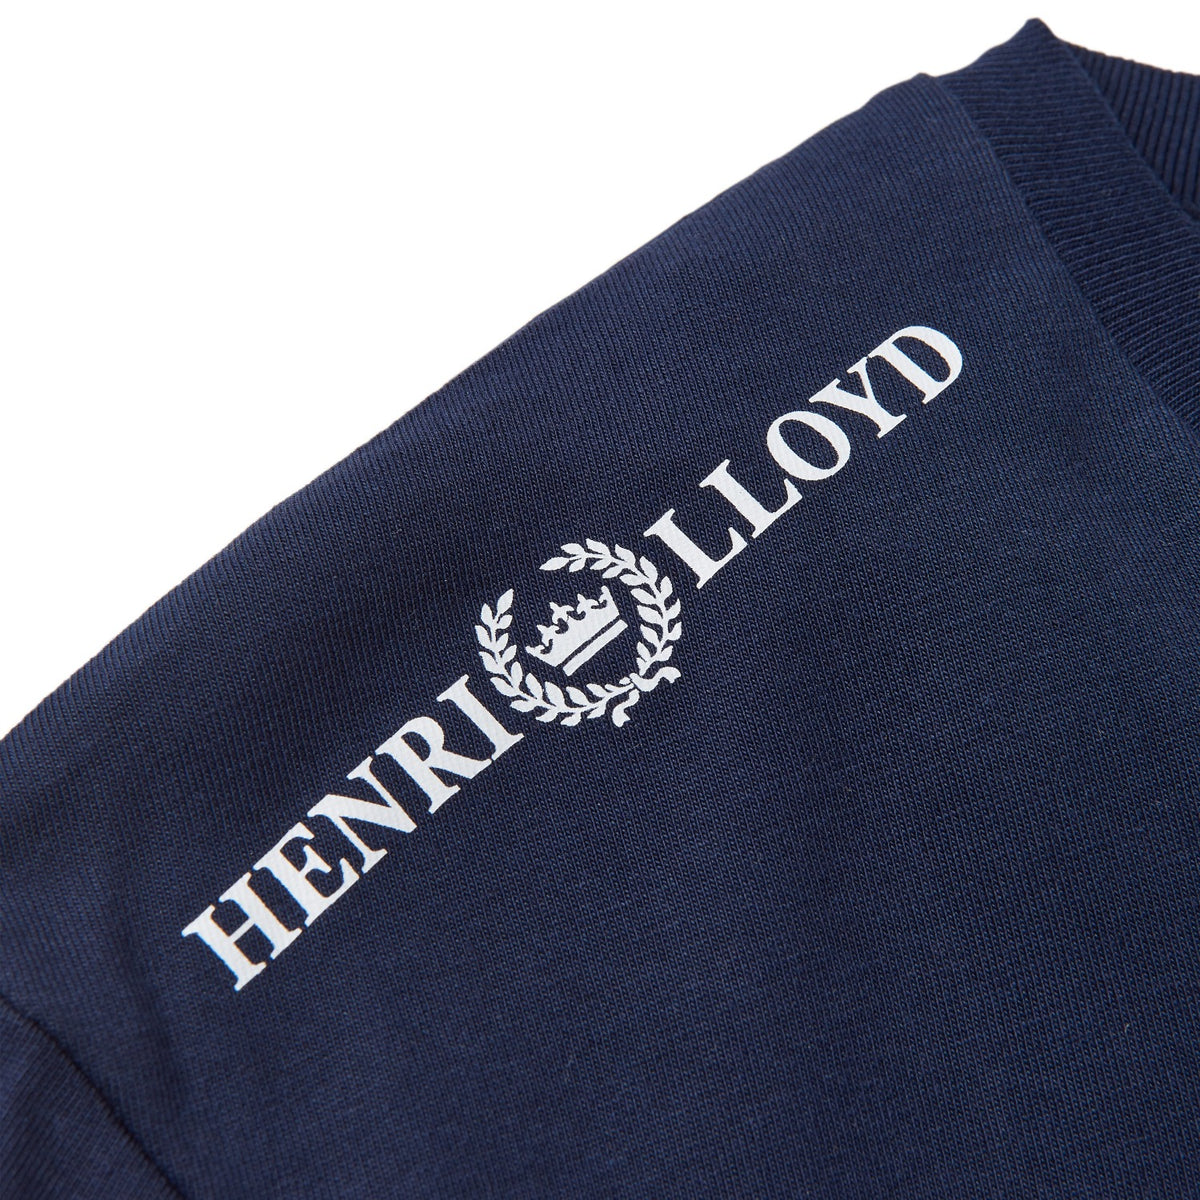 Team GBR Navy Henri Lloyd T-Shirt